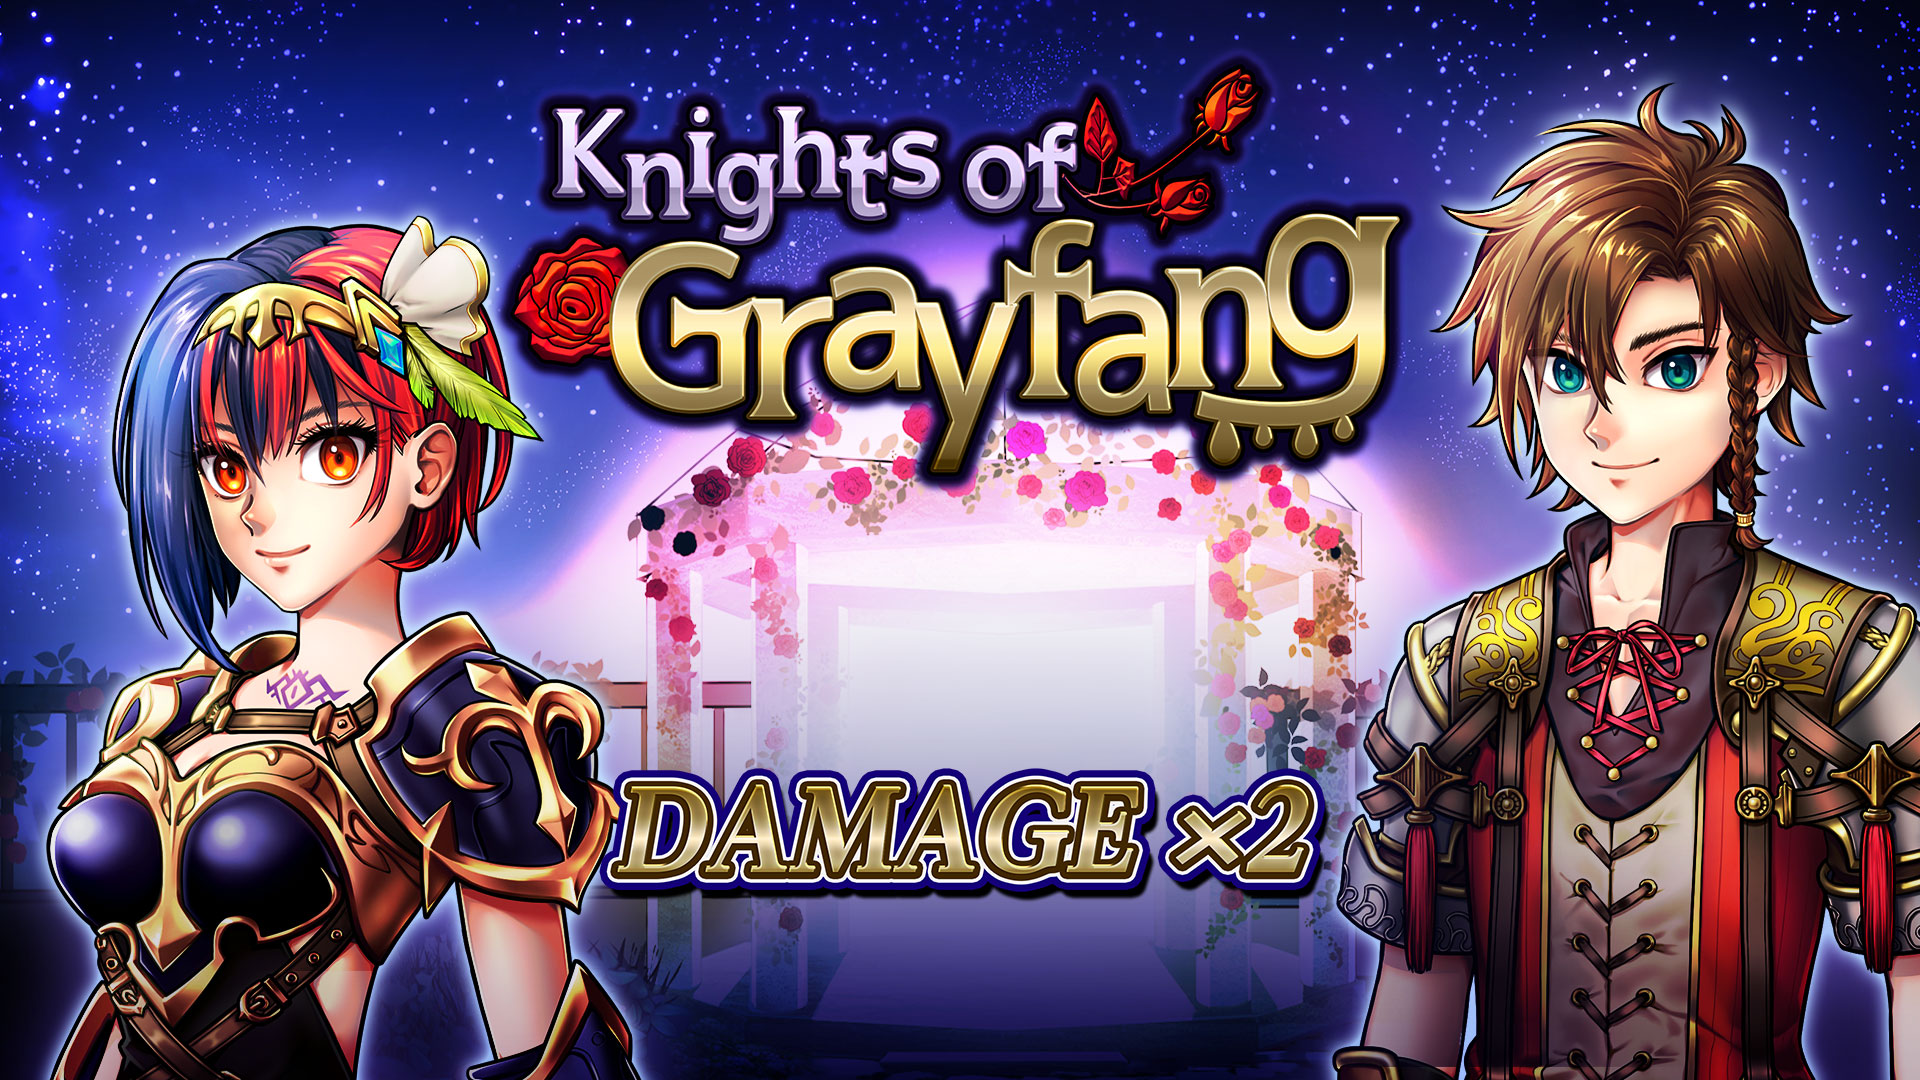 Damage x2 - Knights of Grayfang